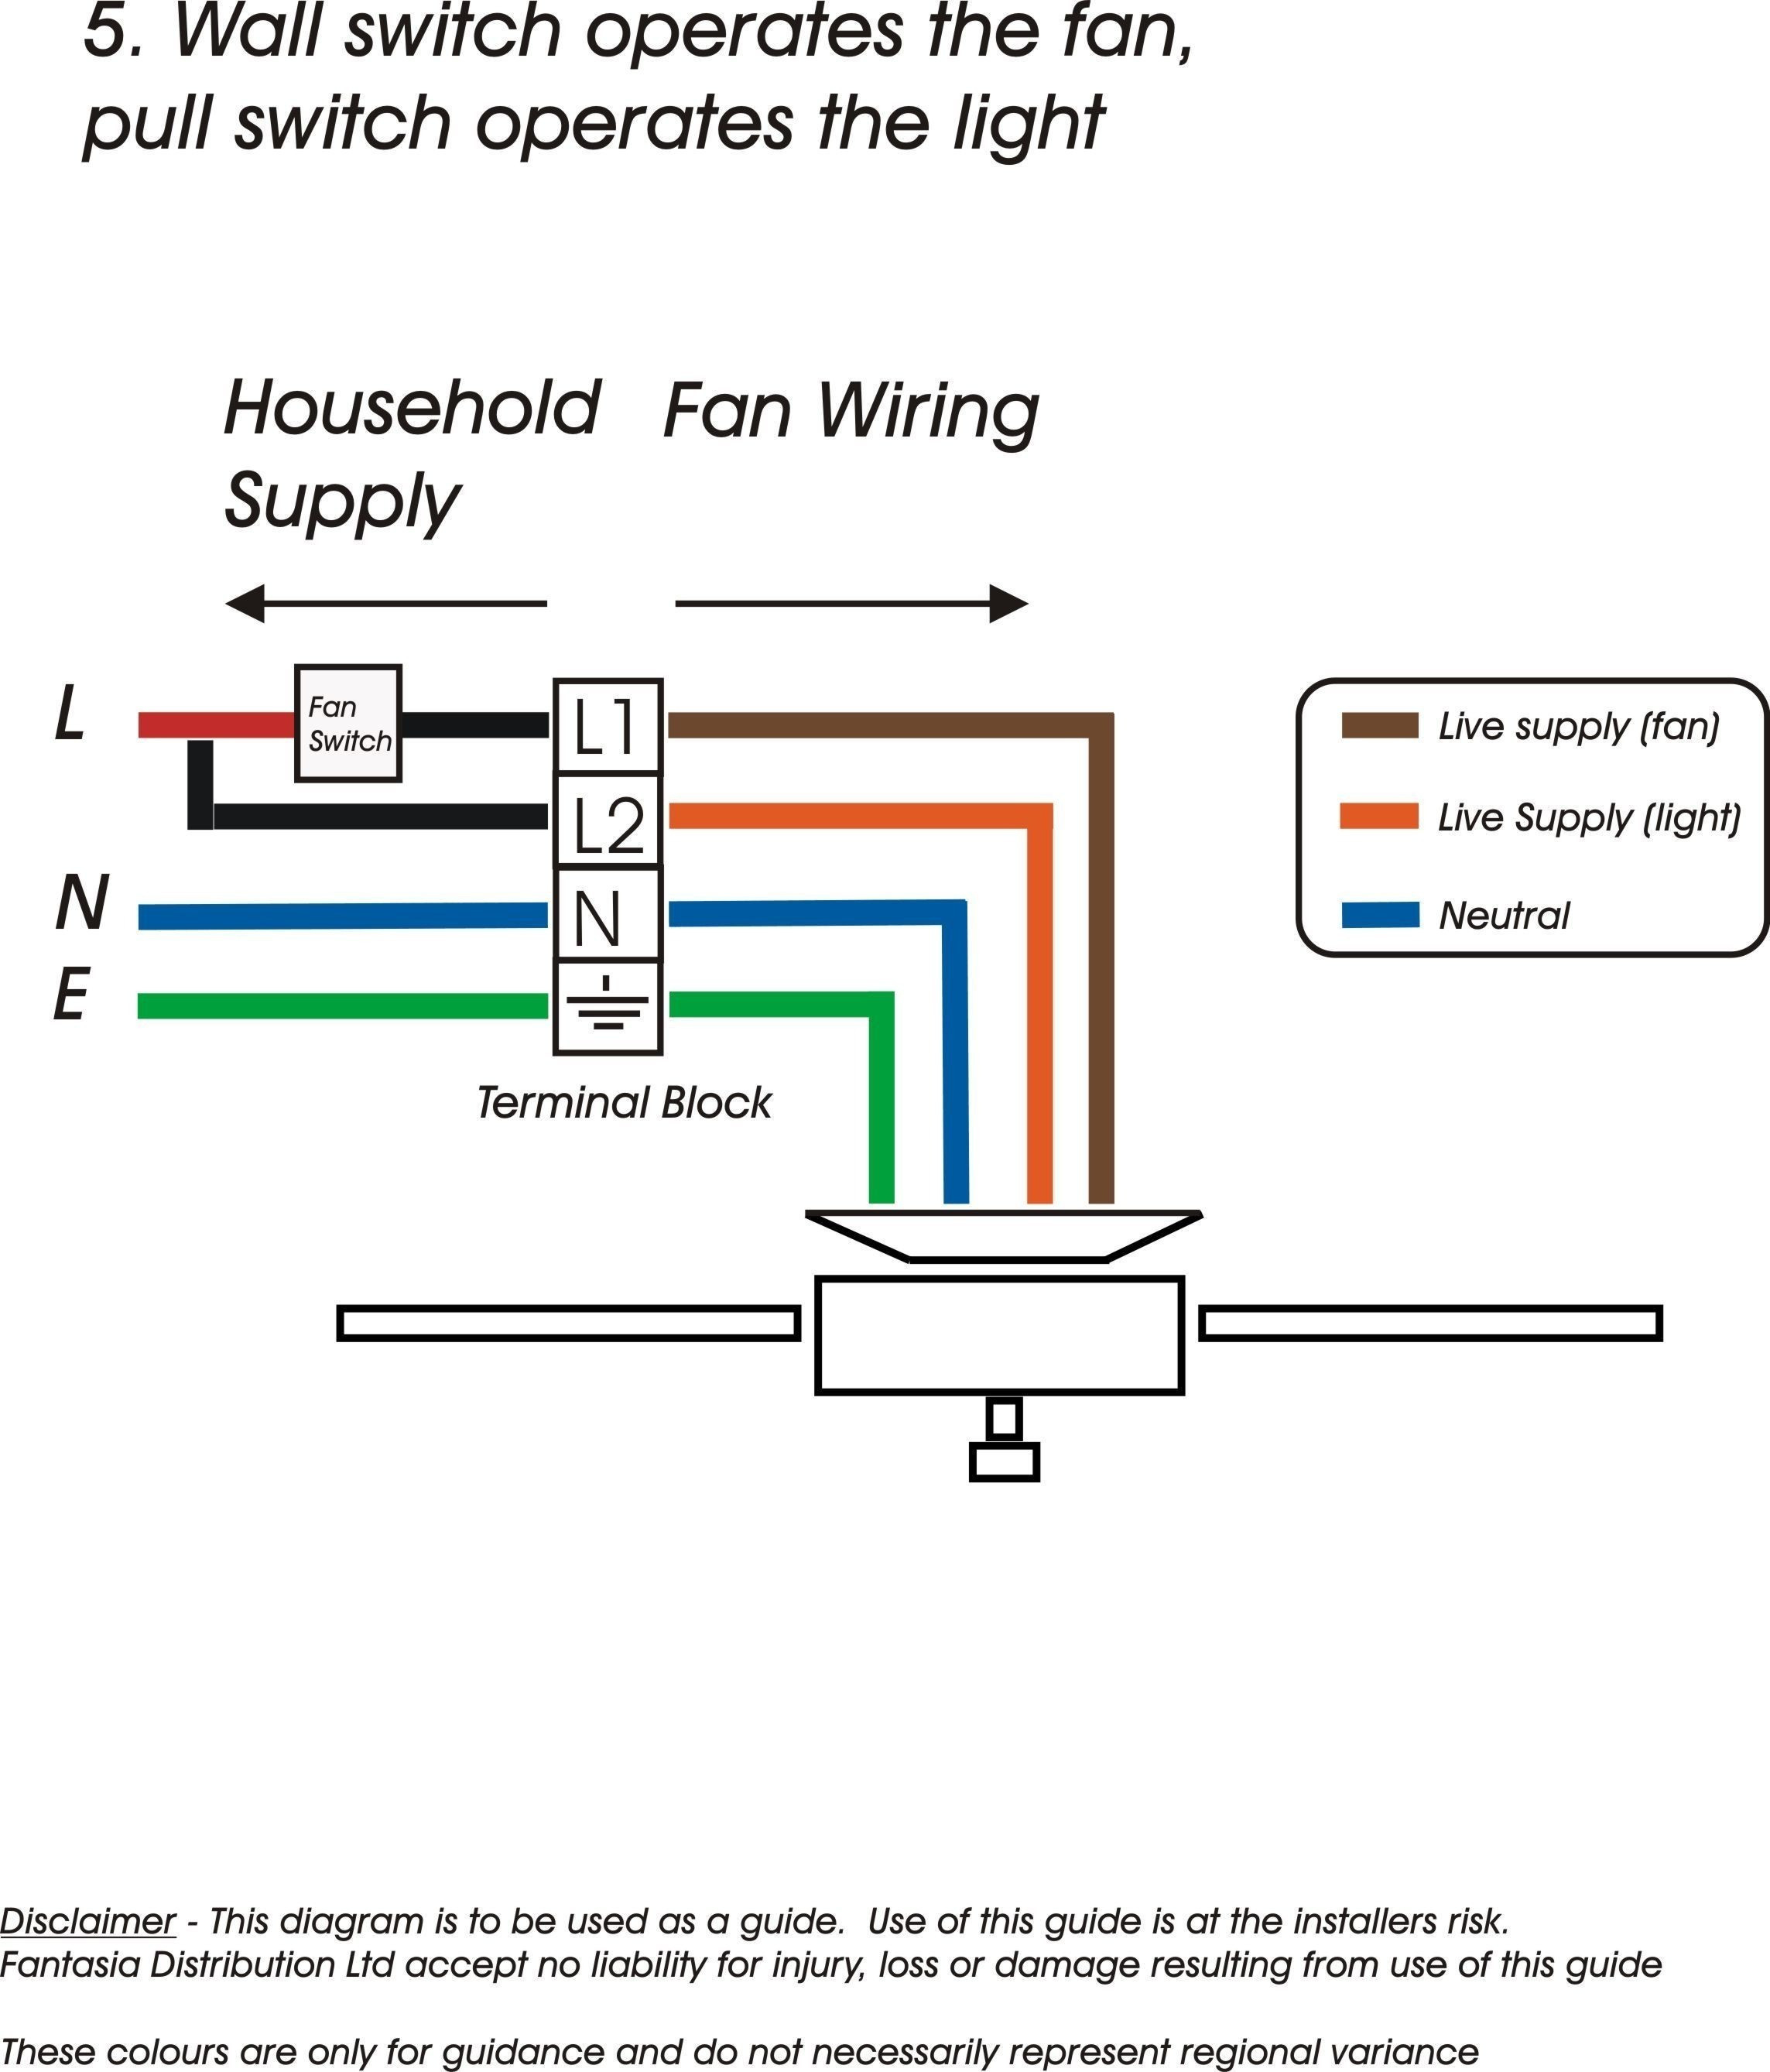 Leviton Decora 3 Way Switch Wiring Diagram 5603 Book Of How To Wire - Leviton Decora 3 Way Switch Wiring Diagram 5603